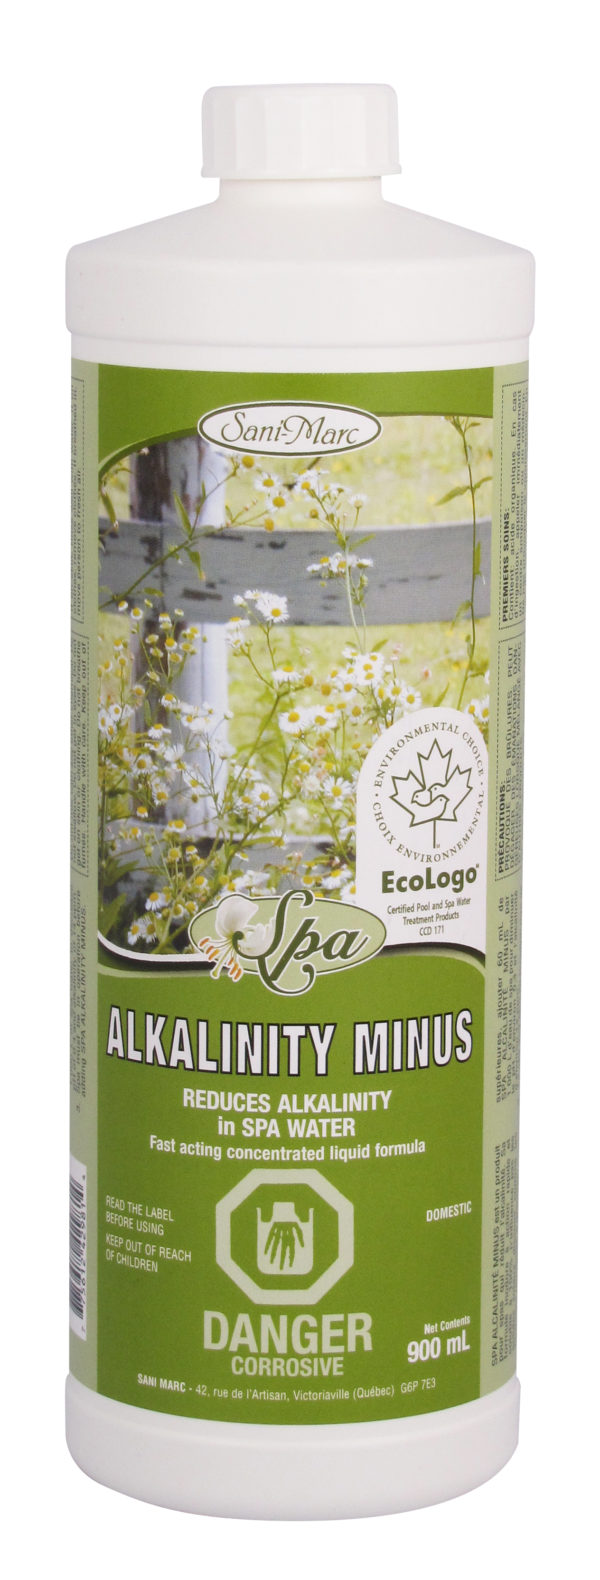 Spa Alkalinity minus